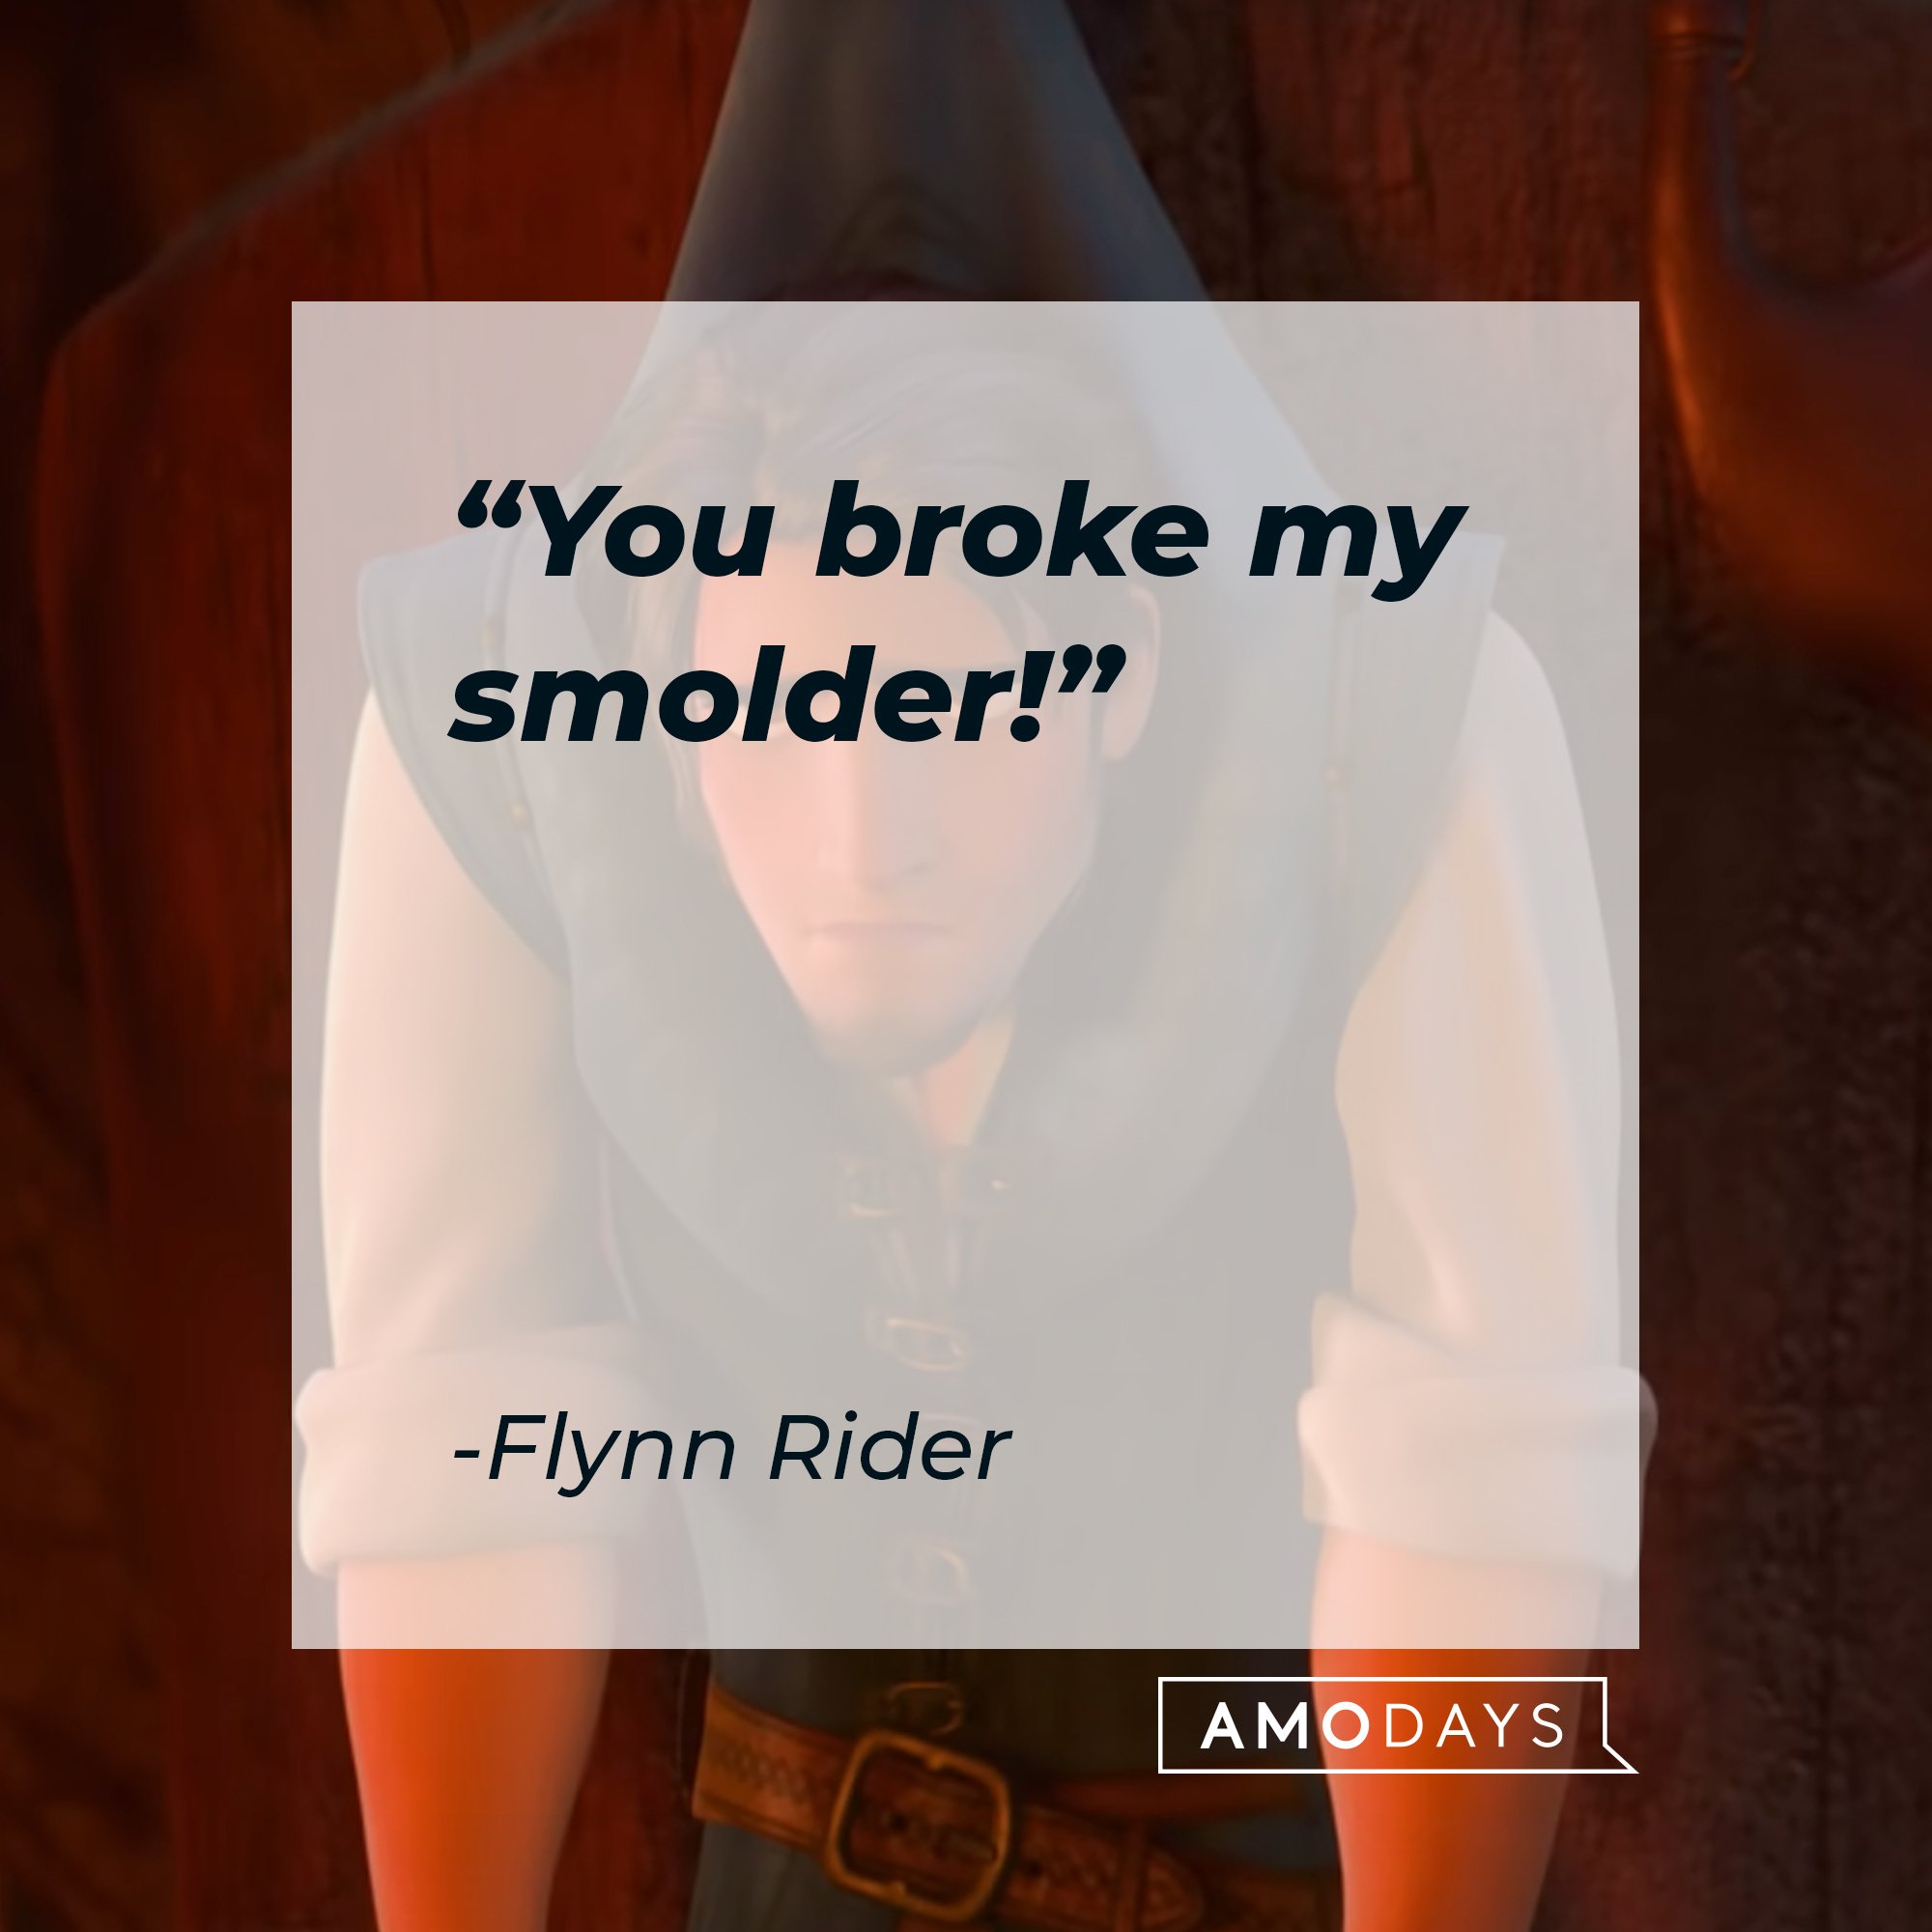 Flynn Rider's quote: "You broke my smolder!" | Image: AmoDays